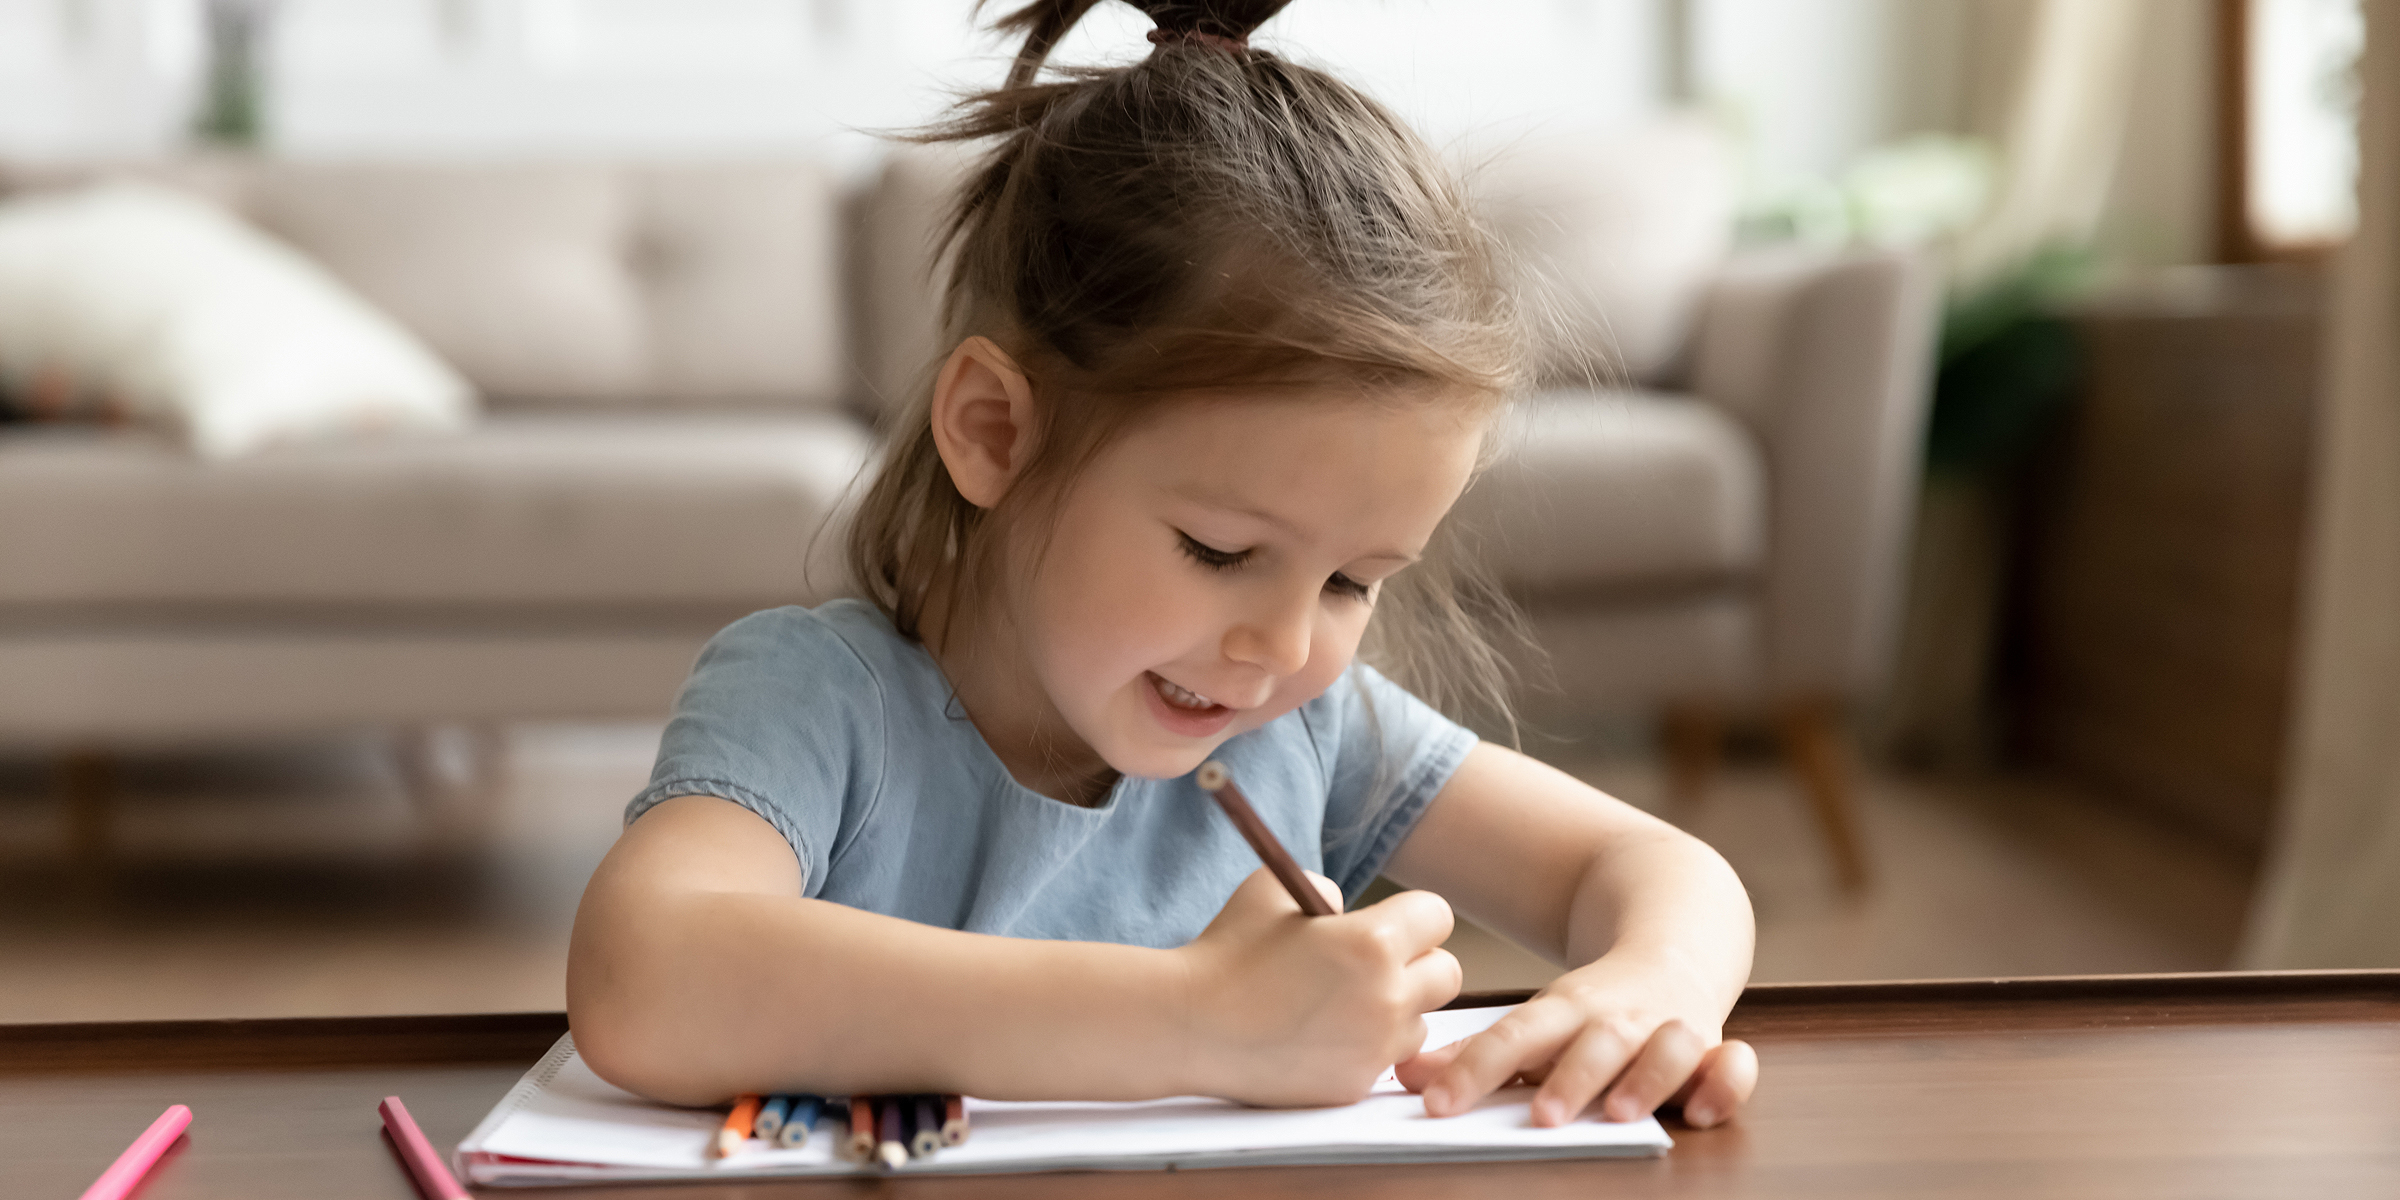 Little girl draws | Source: Shutterstock